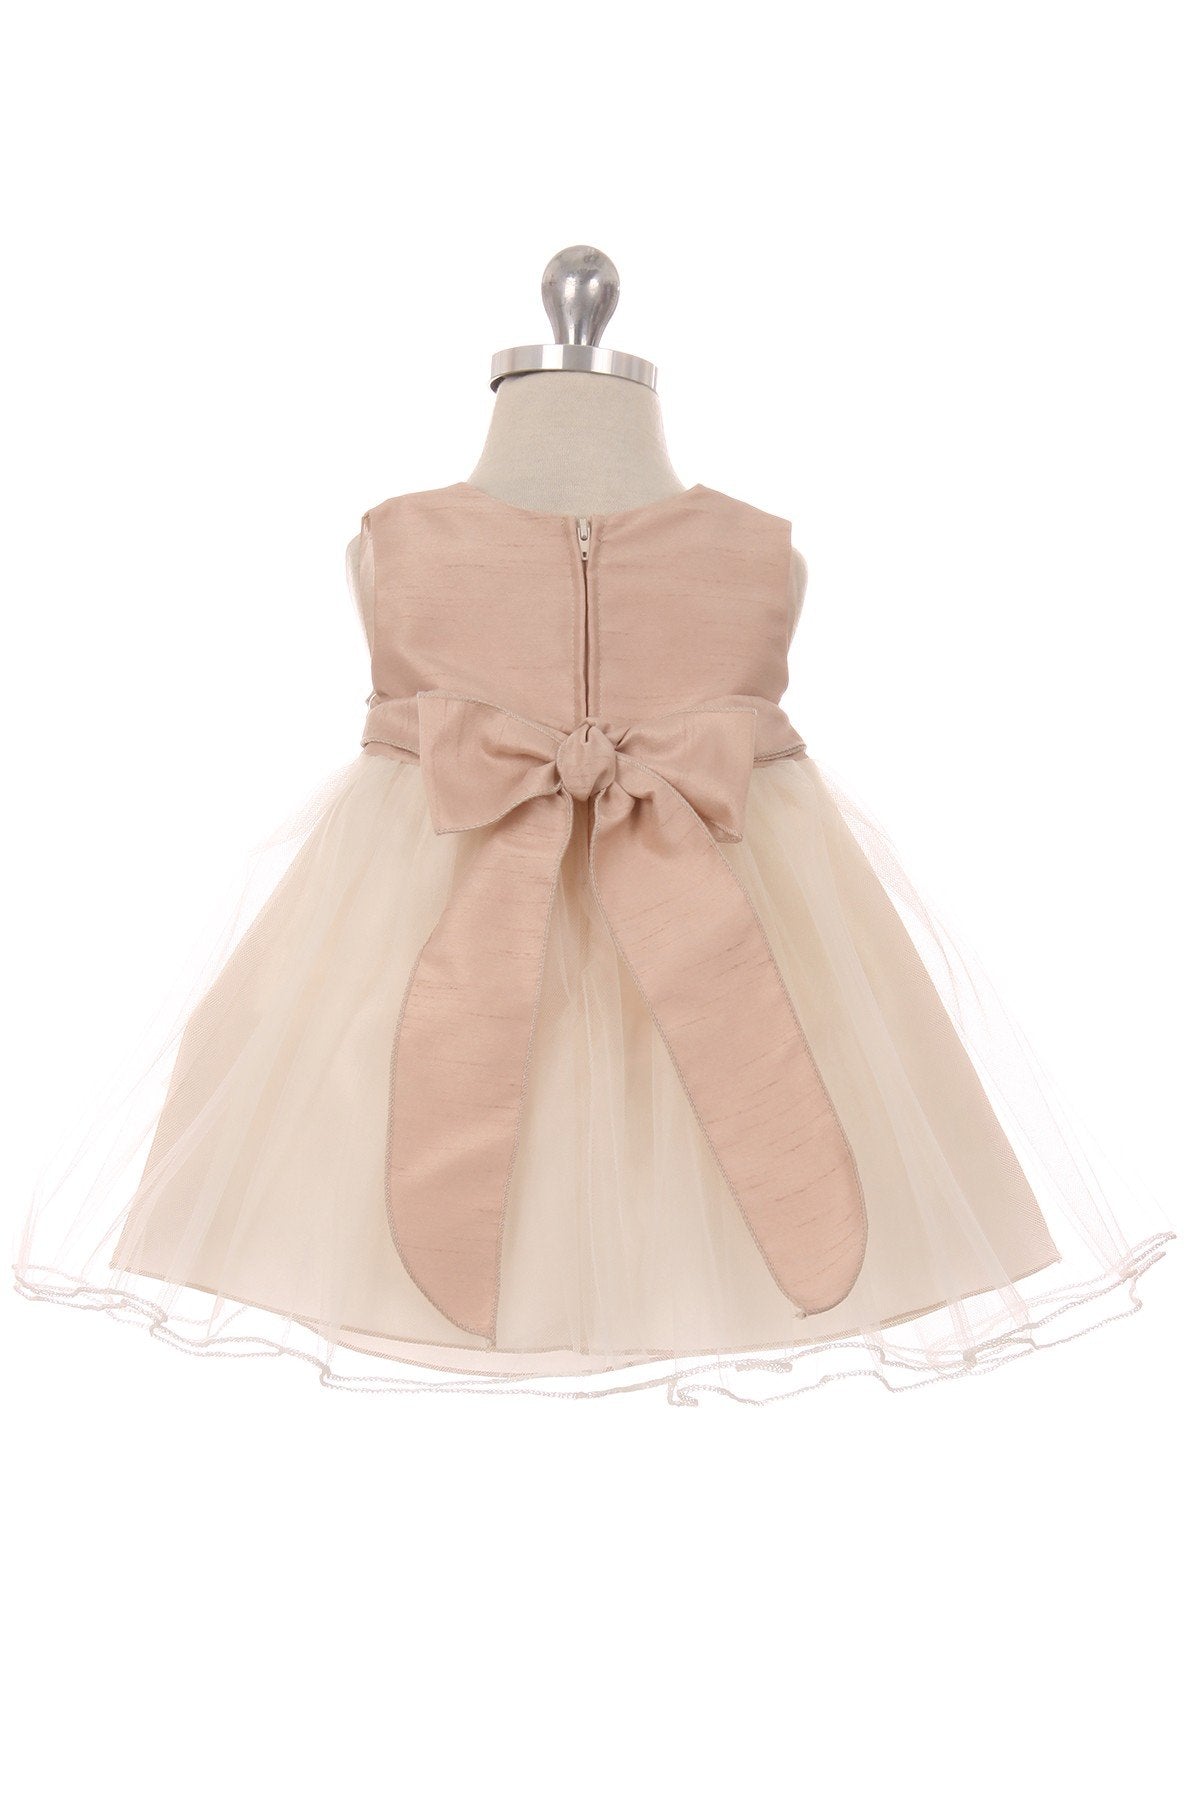 Dress - Satin Tulle Baby Dress